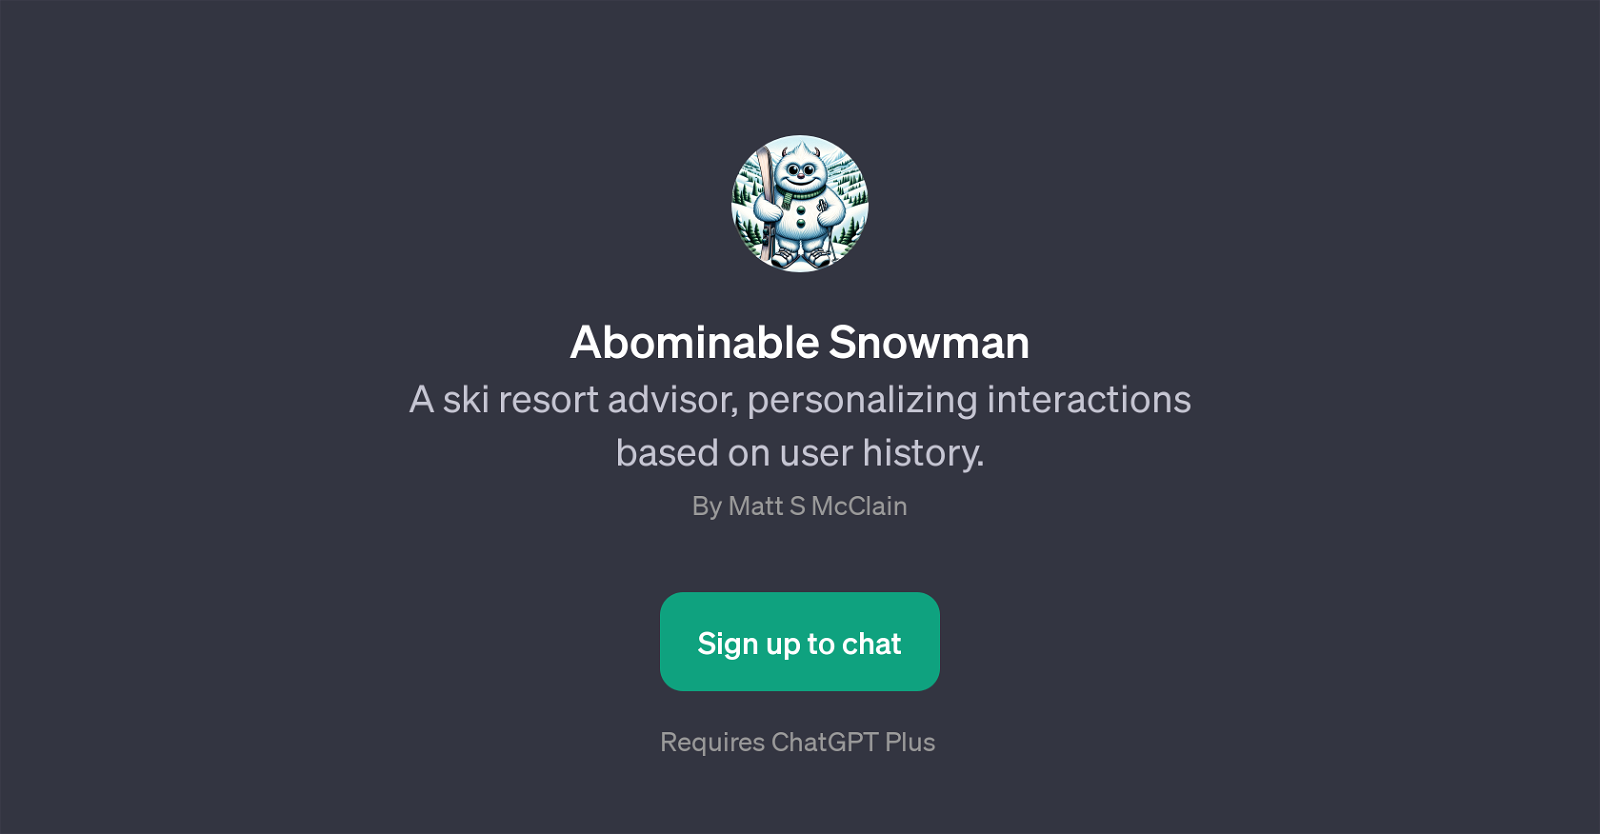 Abominable Snowman website